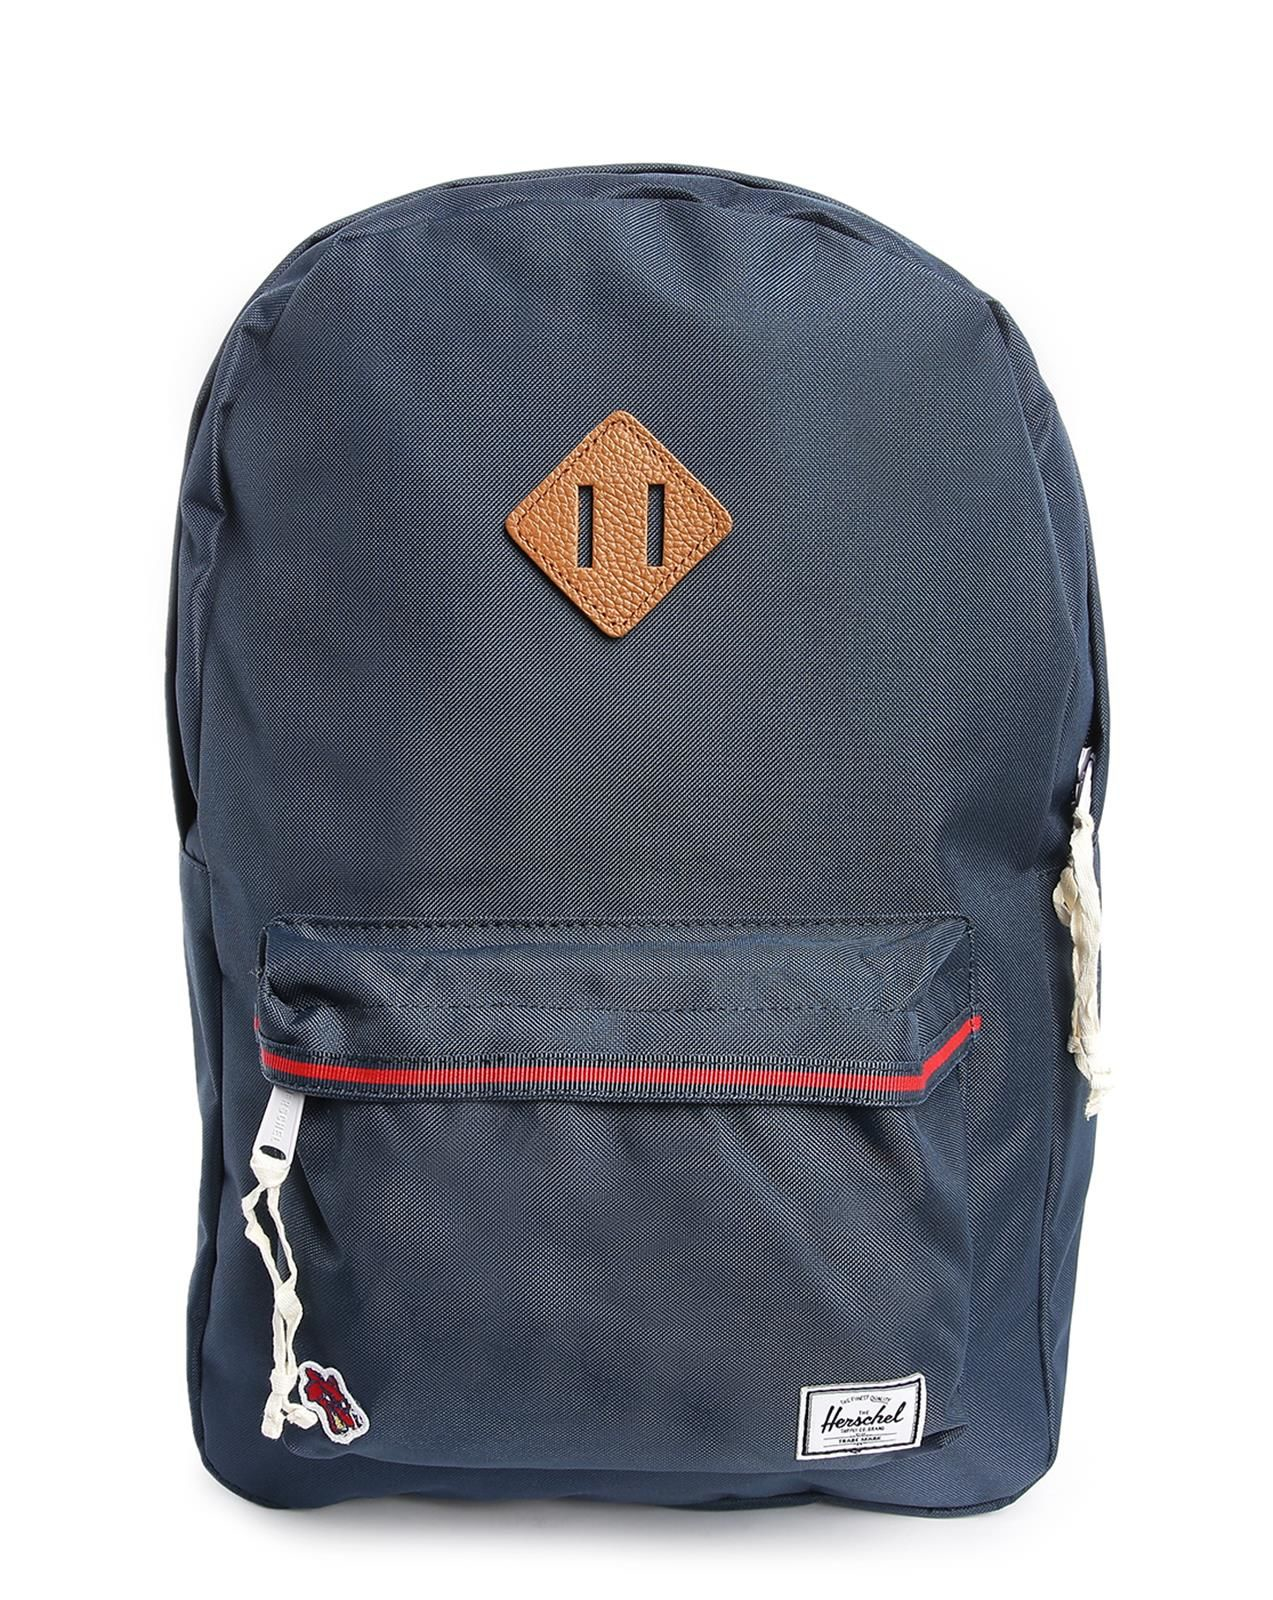 Herschel supply co. Navy Blue Heritage Backpack With Red Trimmed Pocket ...